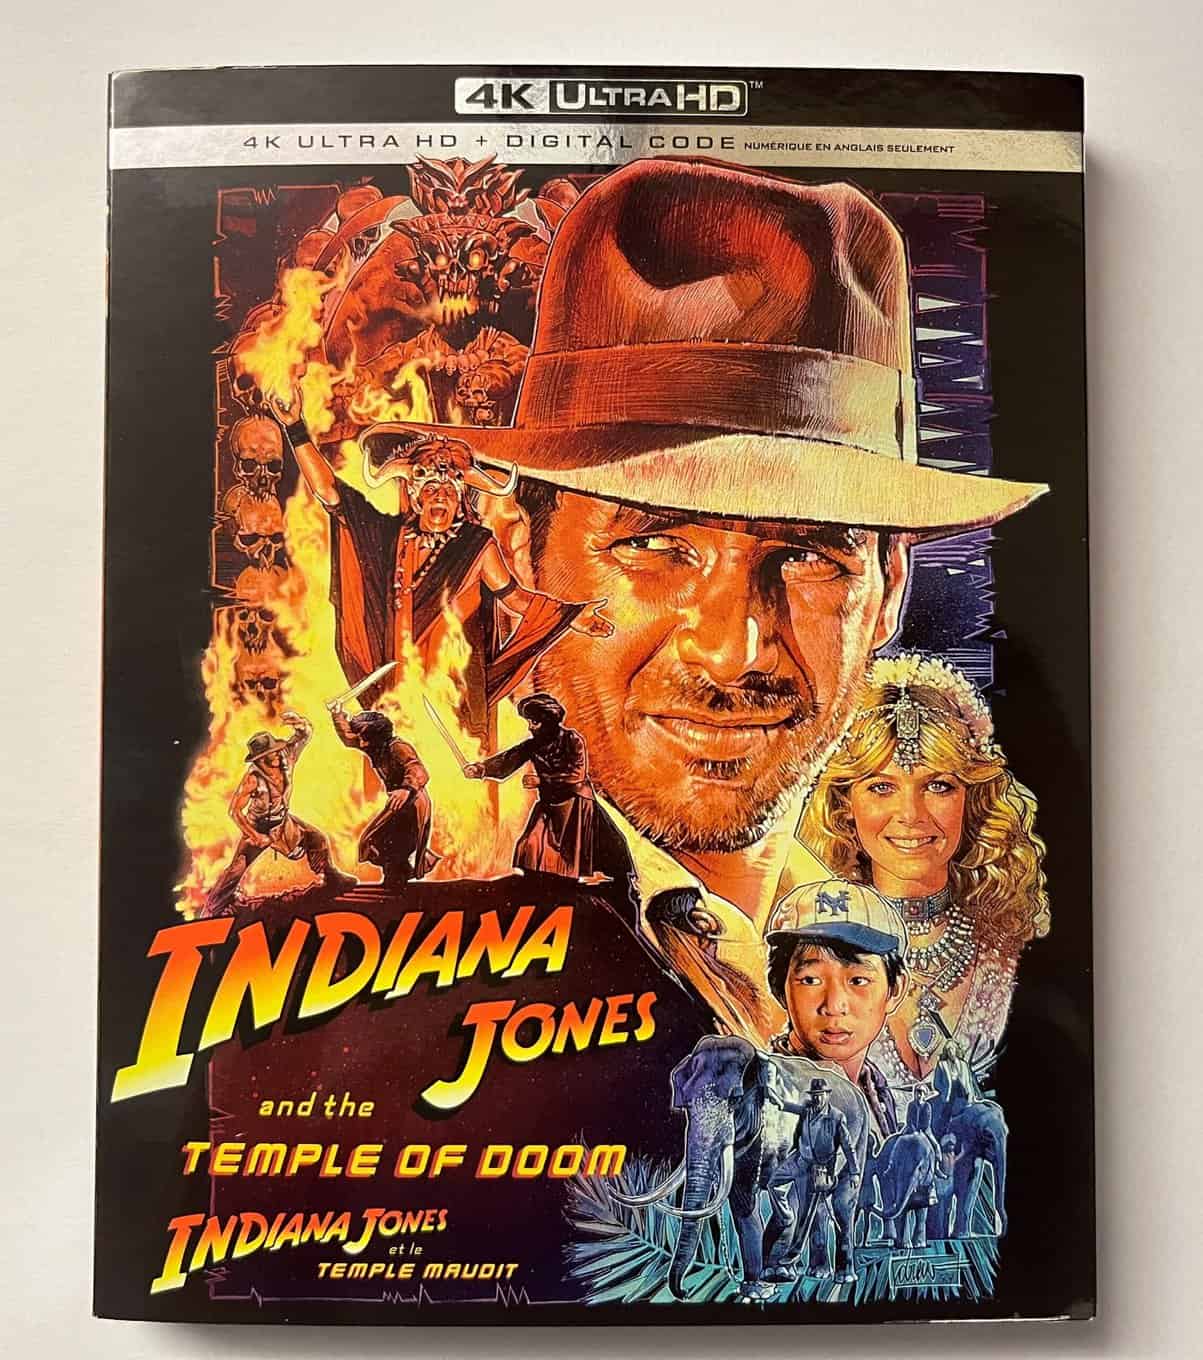  Indiana Jones: The Complete Adventures (Raiders of the Lost Ark  / Temple of Doom / Last Crusade / Kingdom of the Crystal Skull) [Blu-ray] :  John Rhys-Davies, Julian Glover, Harrison Ford